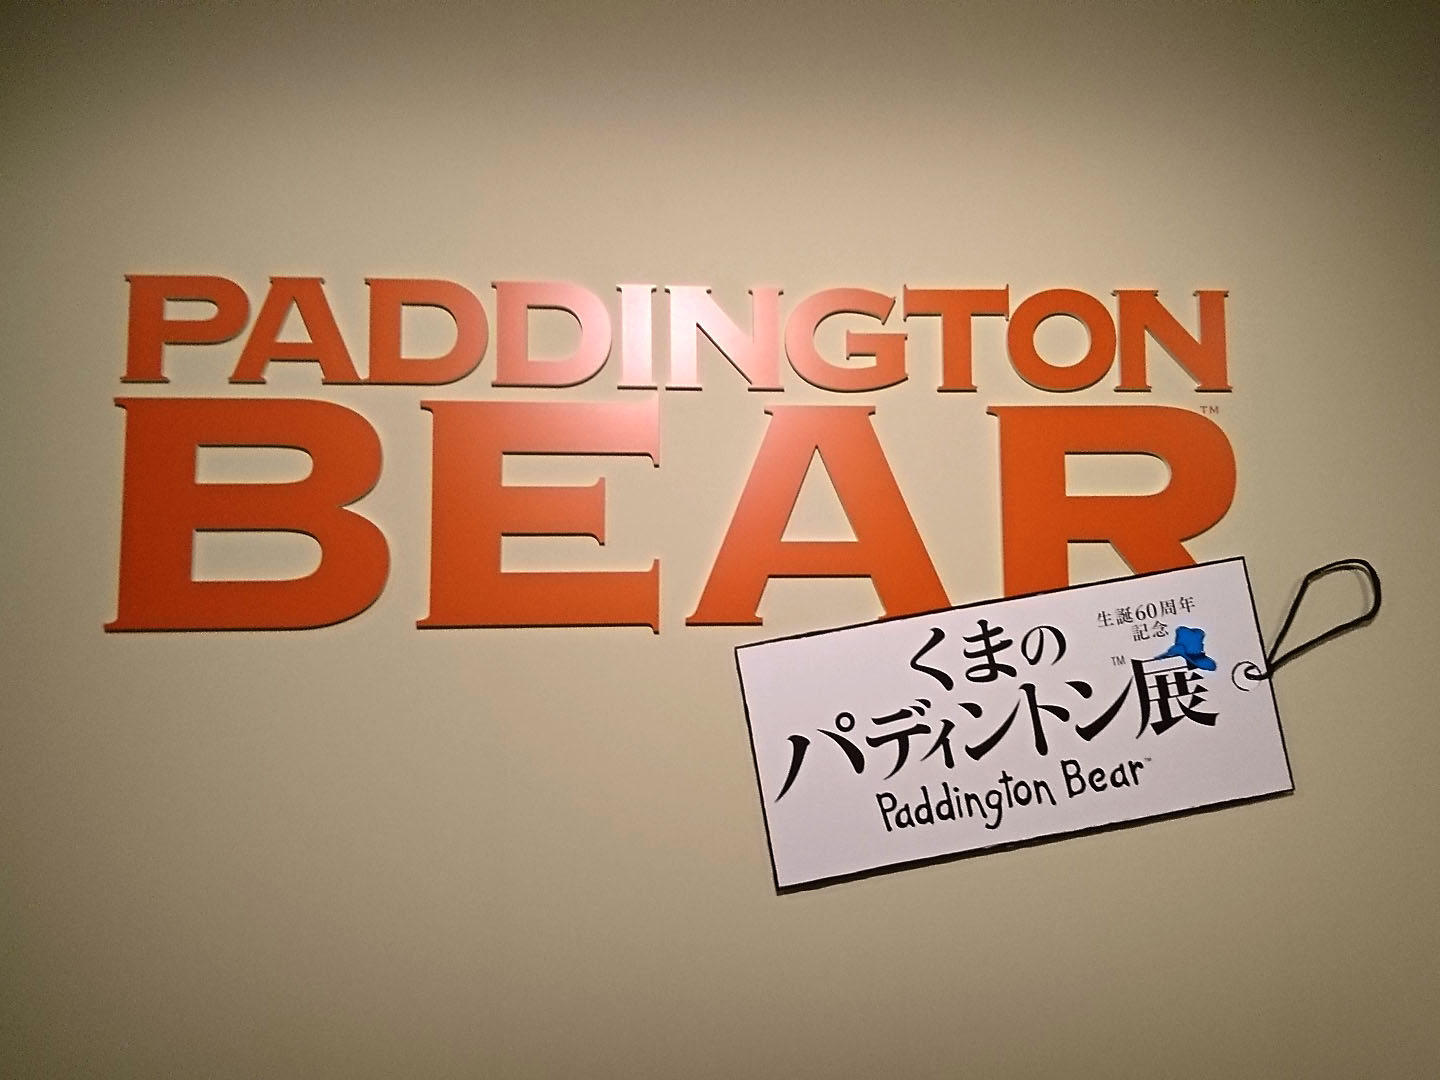 Paddington’s worldwide touring exhibit